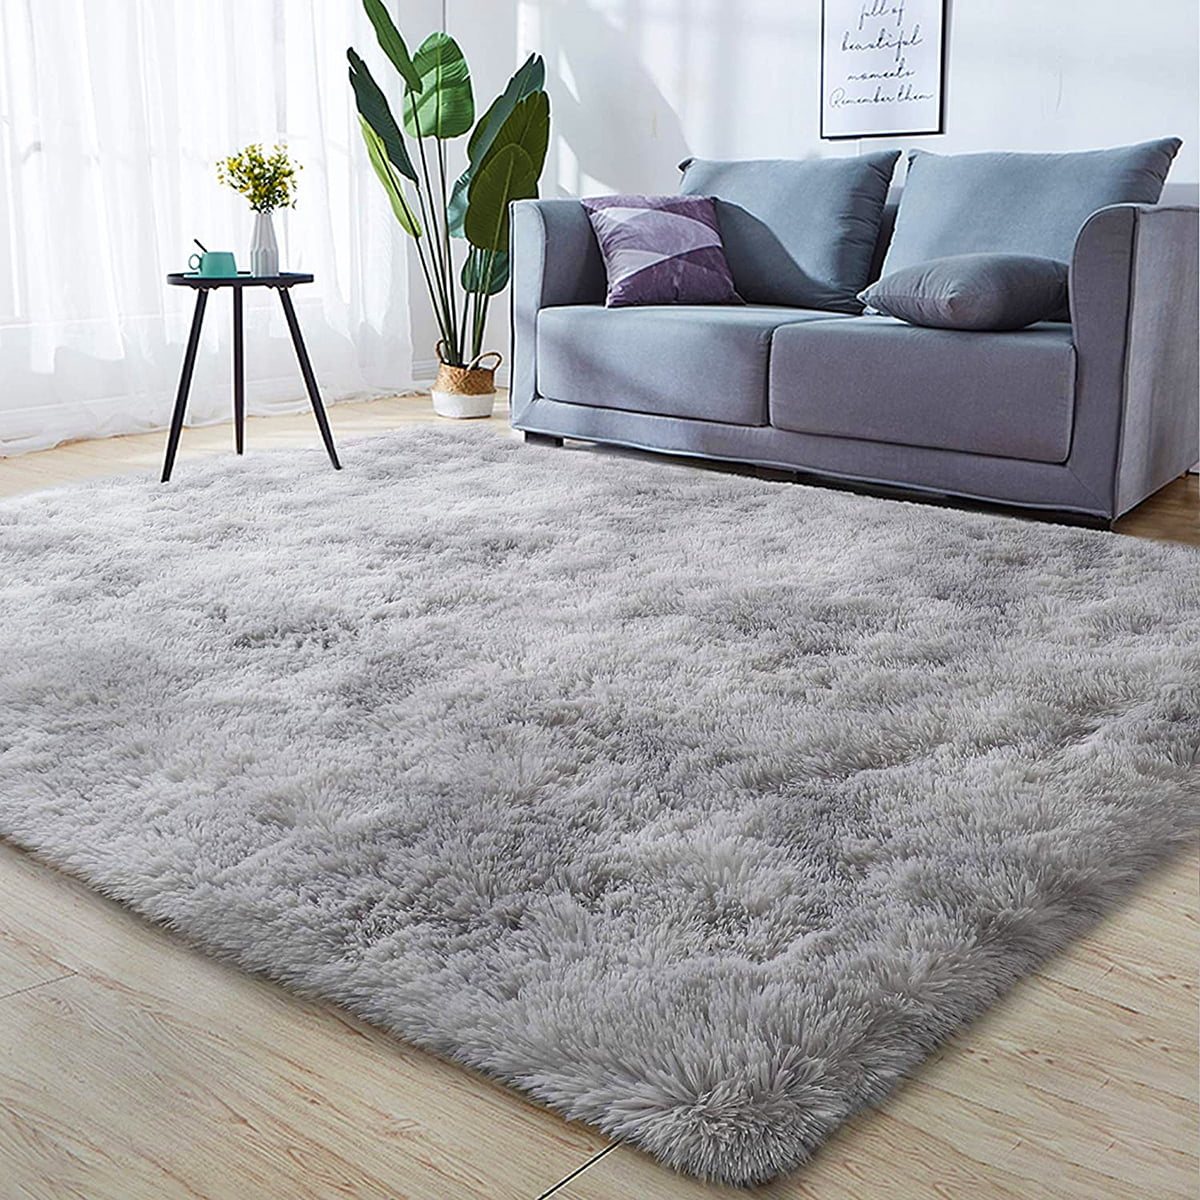 Thick Large Shaggy Rug Super Soft Floor Carpet Mat Deep Pile Kitchen Living Room 